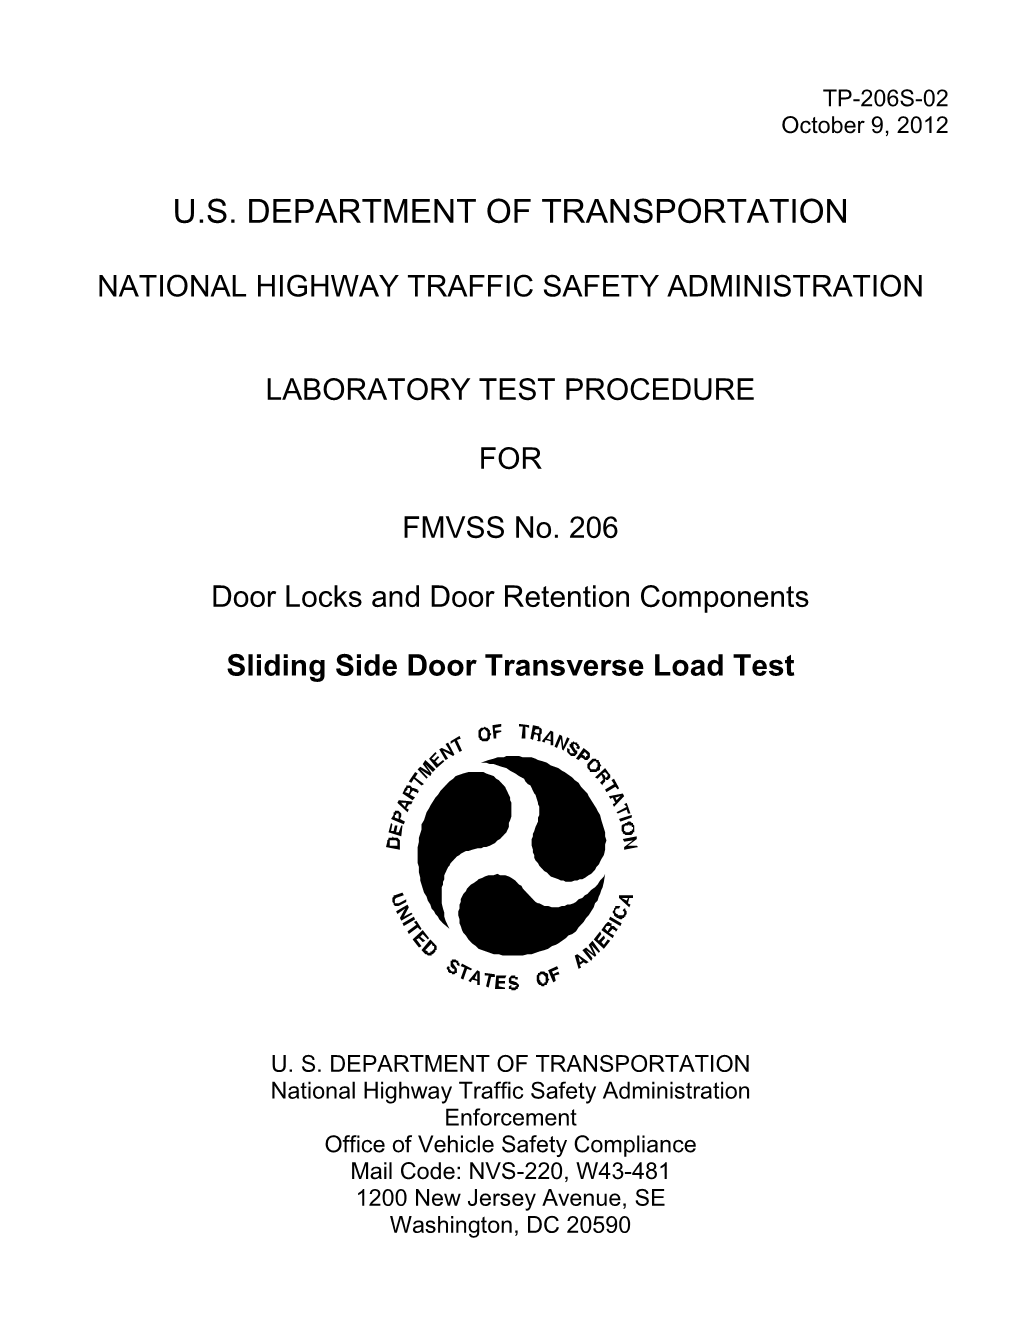 Laboratory Test Procedure for Fmvss 206S